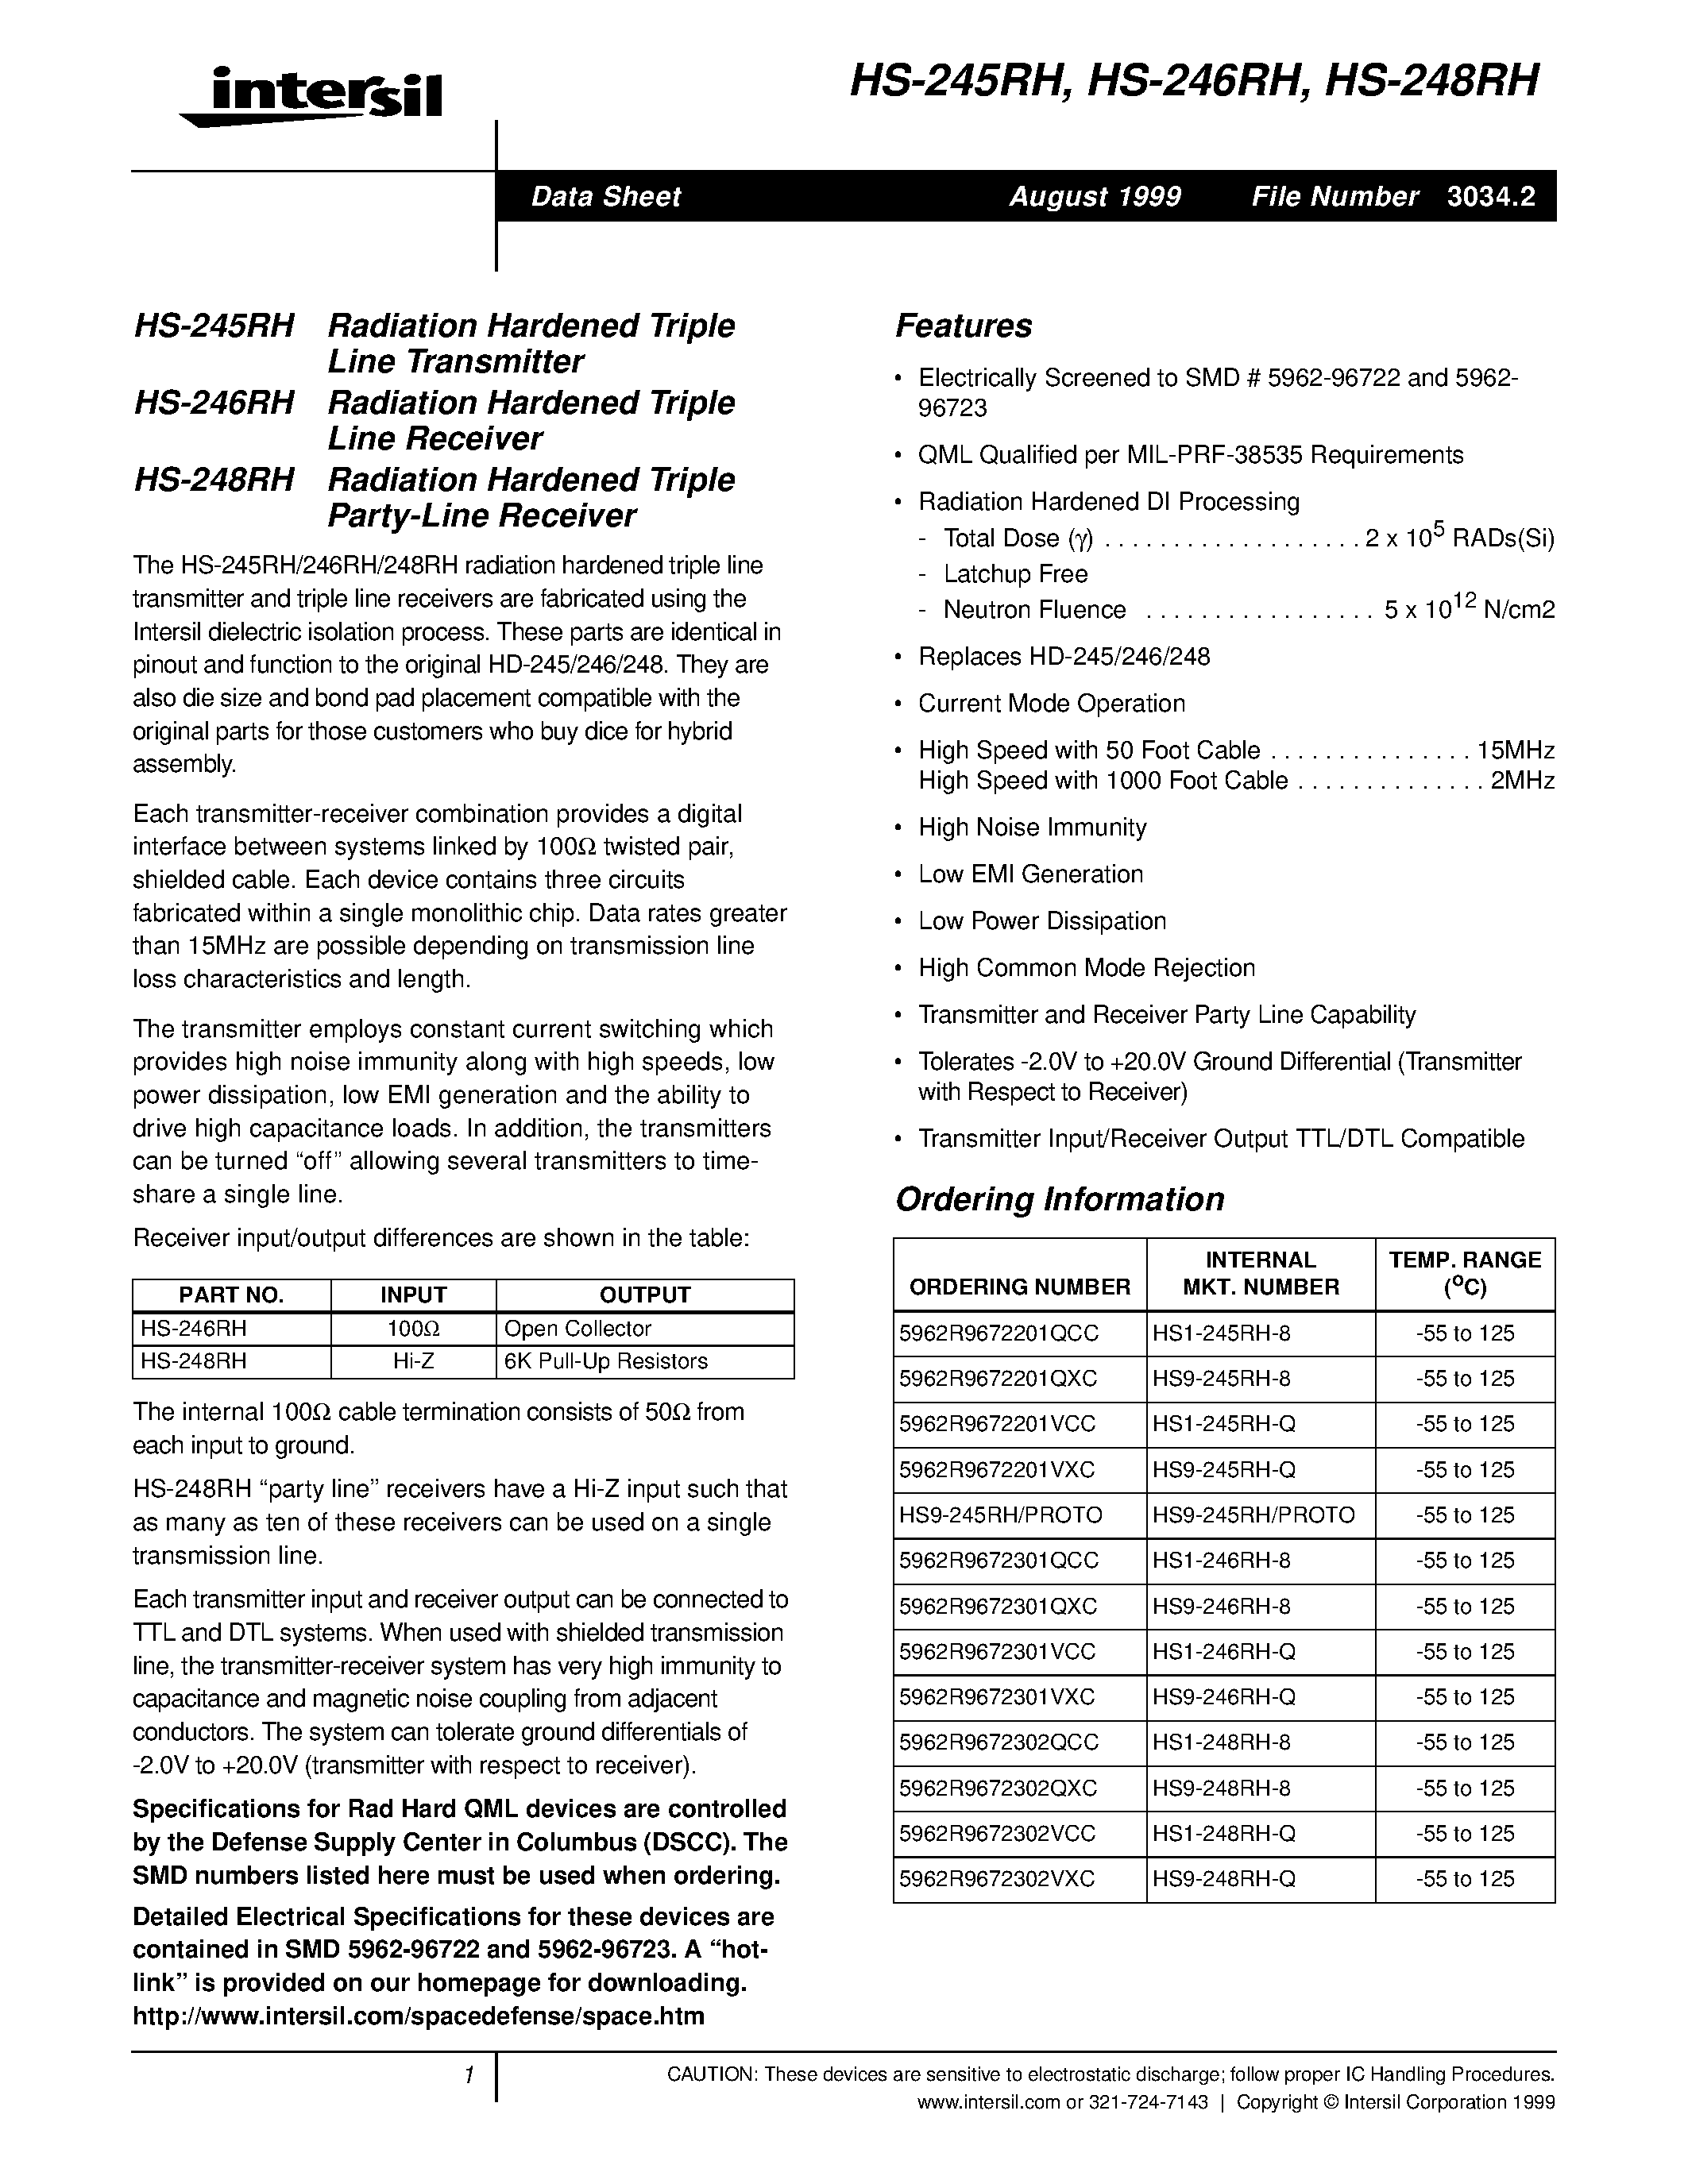 Datasheet HS1-245RH-8 - Radiation Hardened Triple Line(party-Line) Transmitter page 1